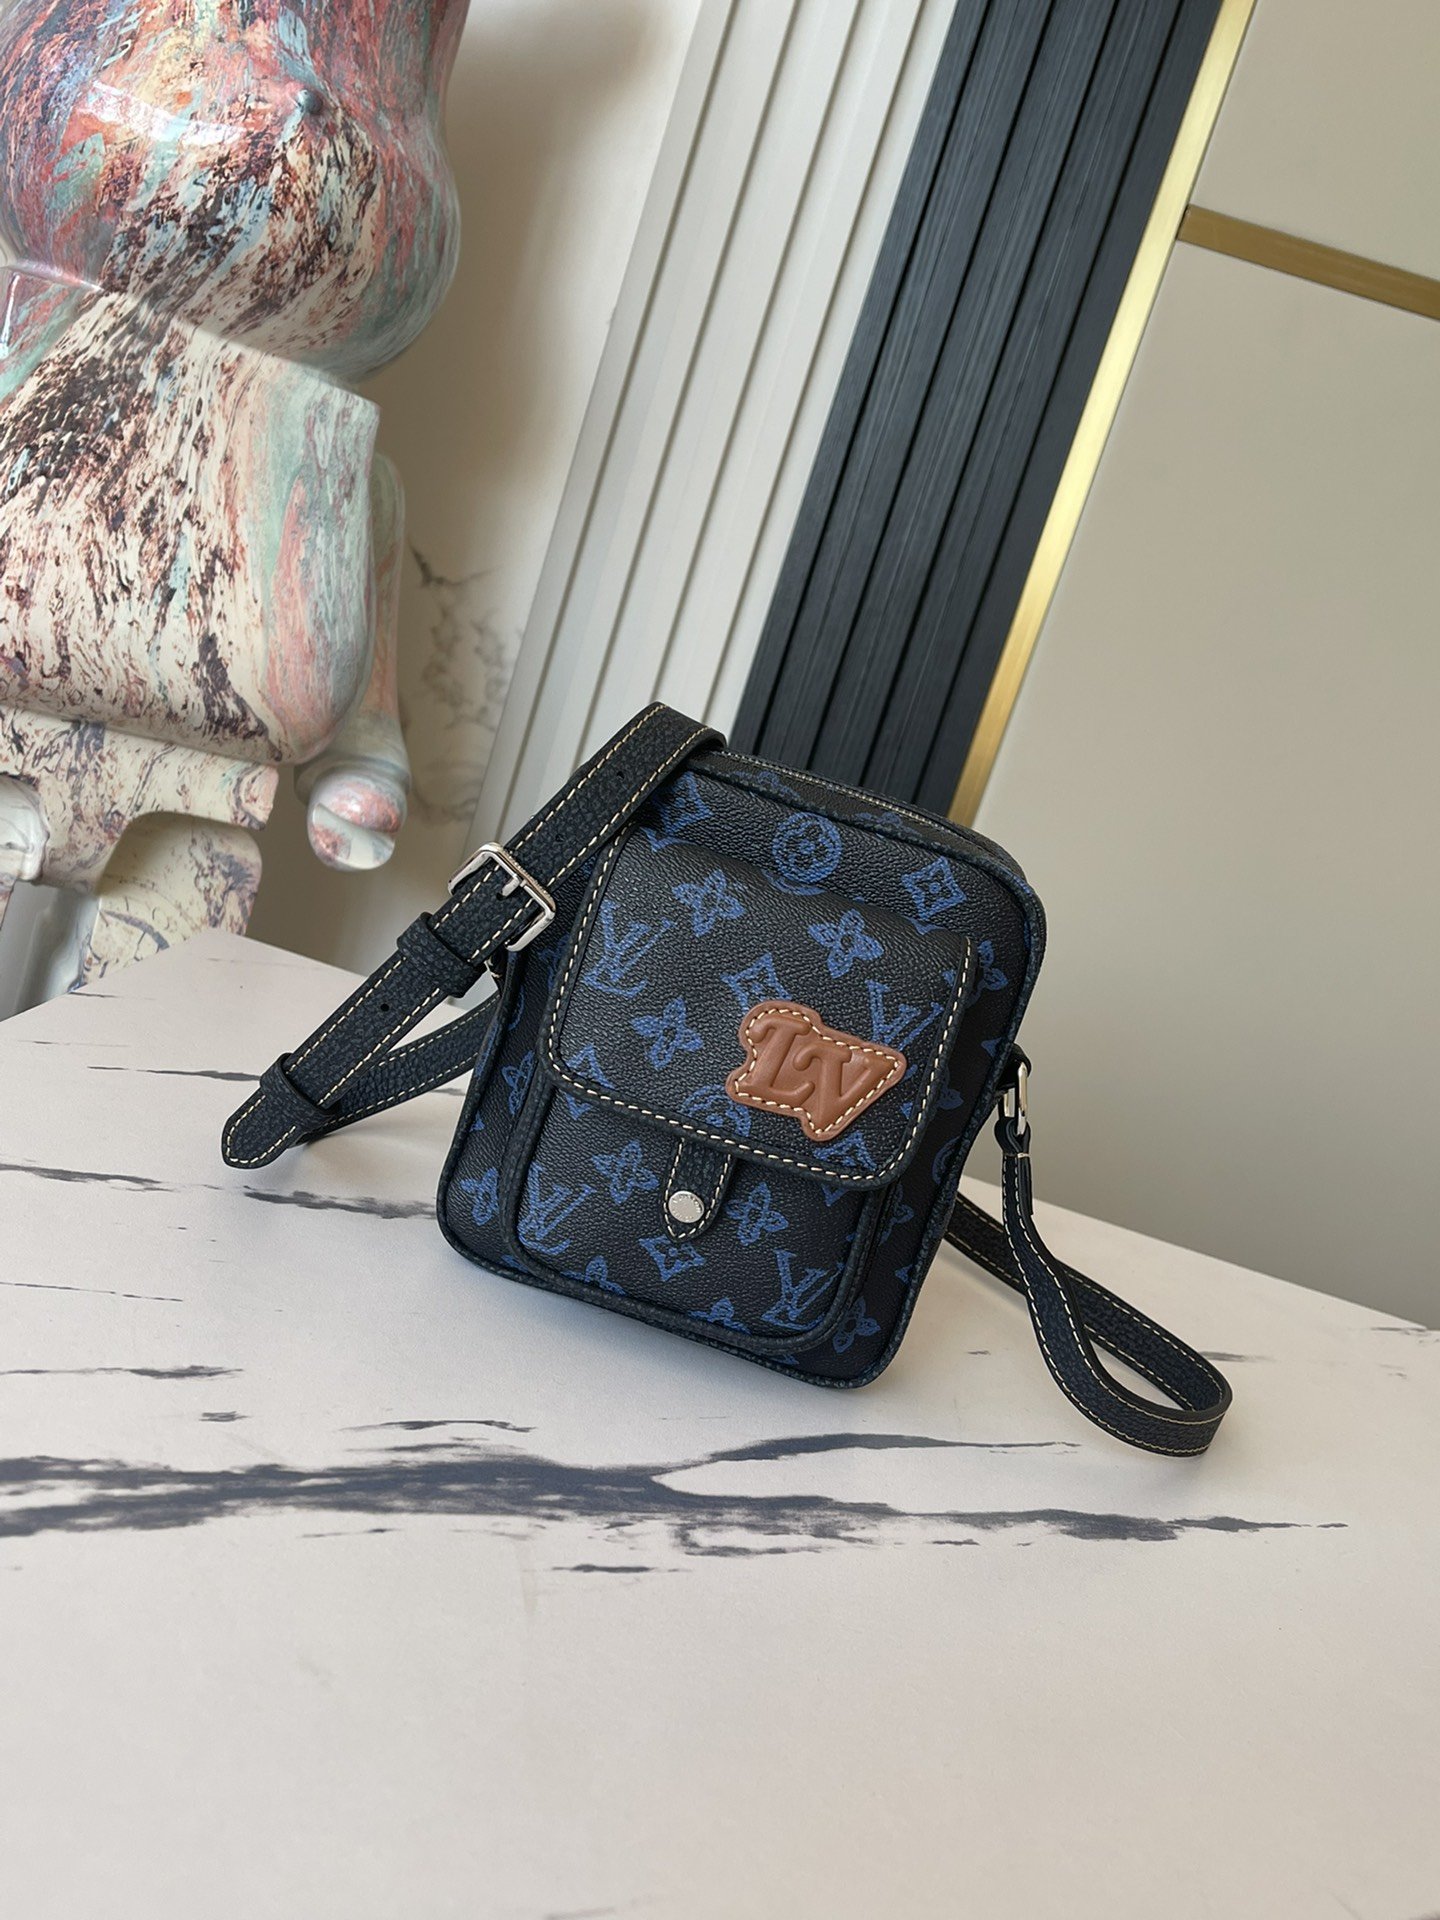 A bag ChristoPher M81854 17 cm фото 2